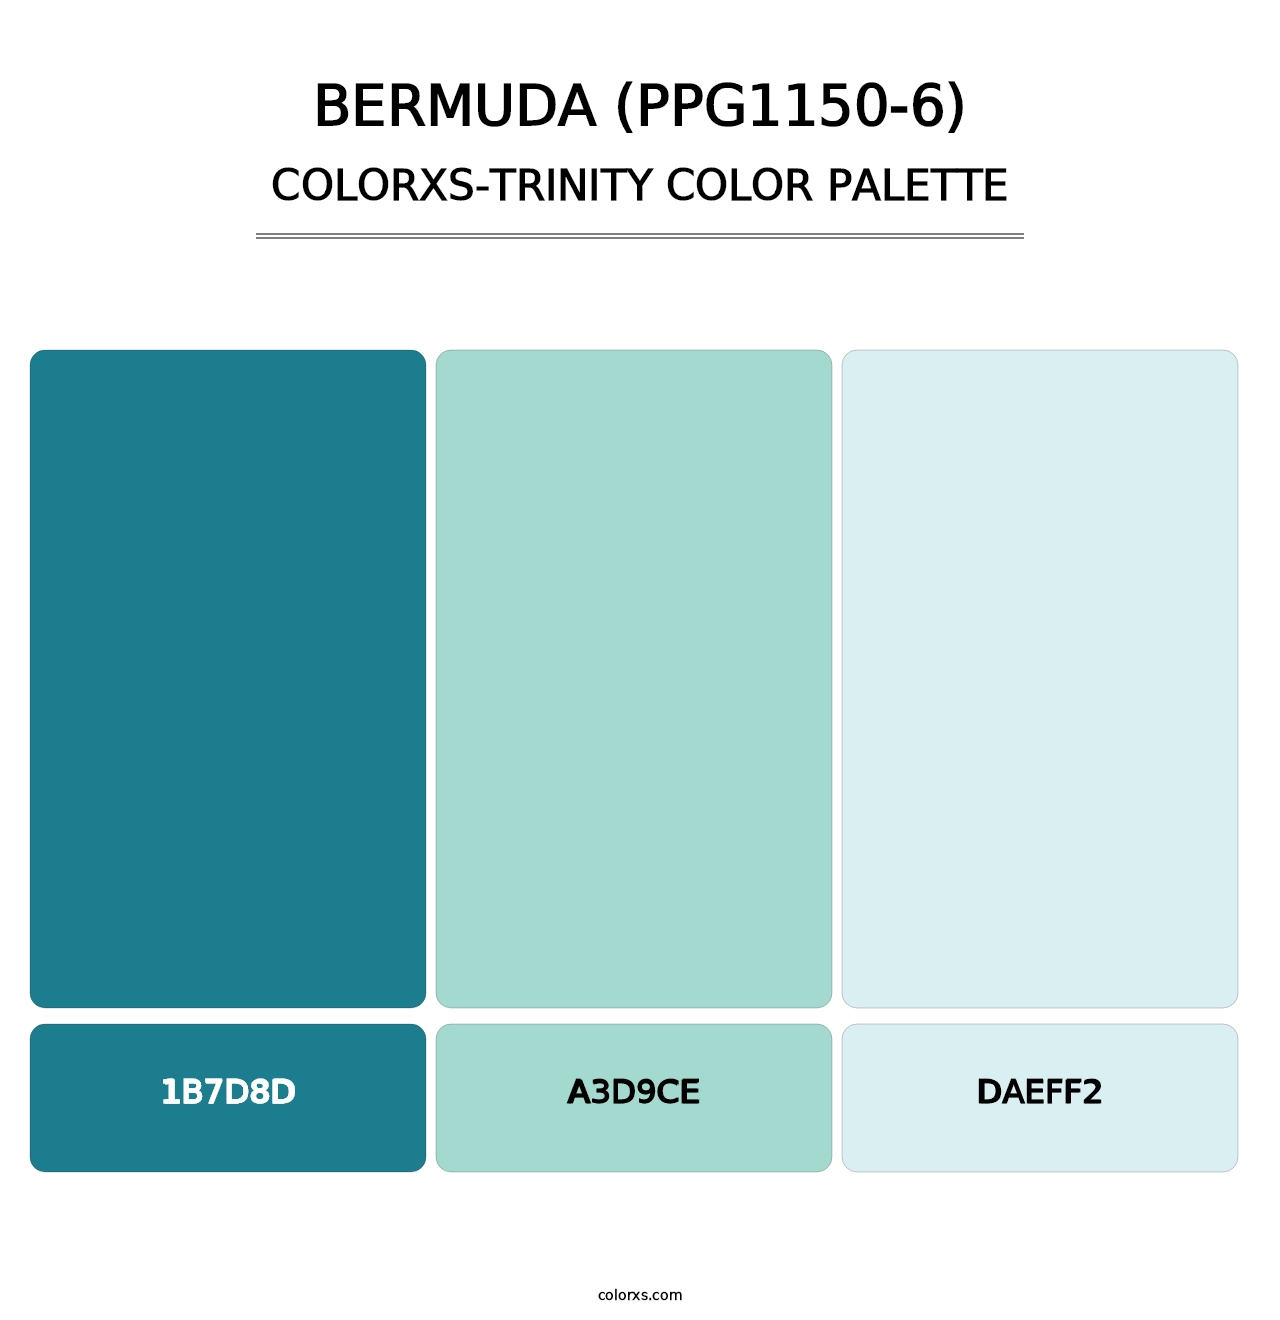 Bermuda (PPG1150-6) - Colorxs Trinity Palette